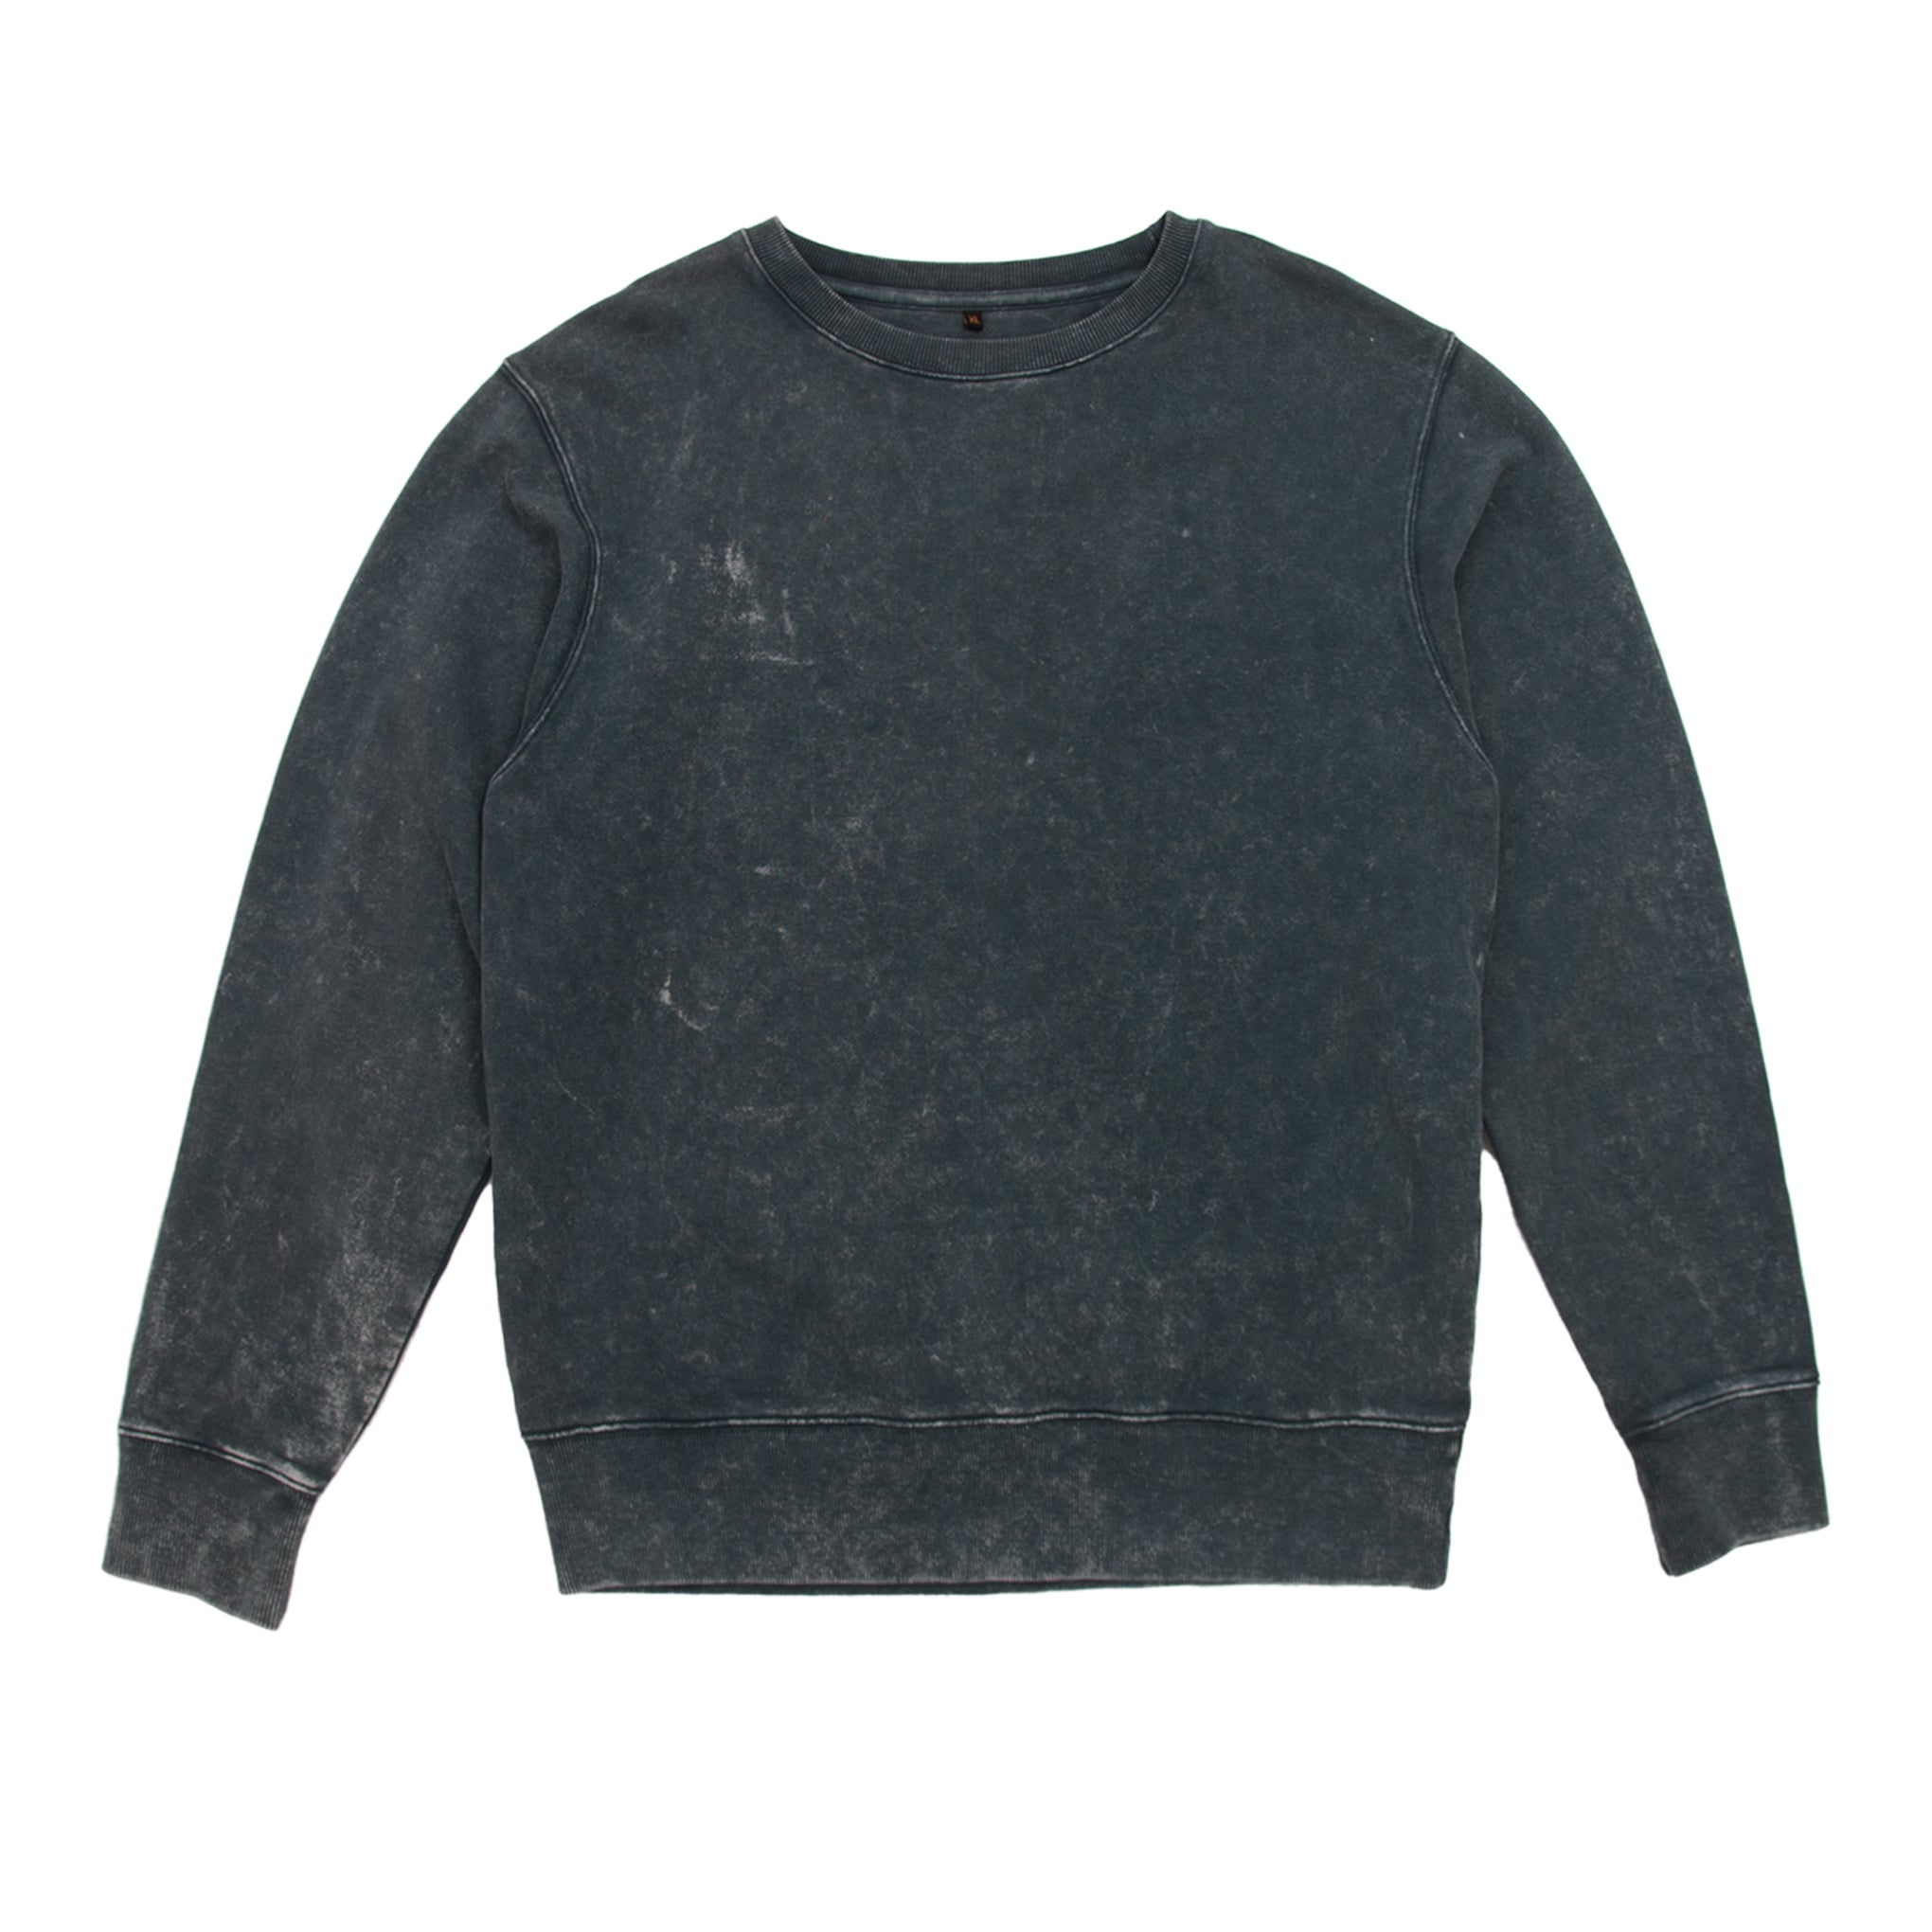 Origins Sweatshirt - Vintage Black